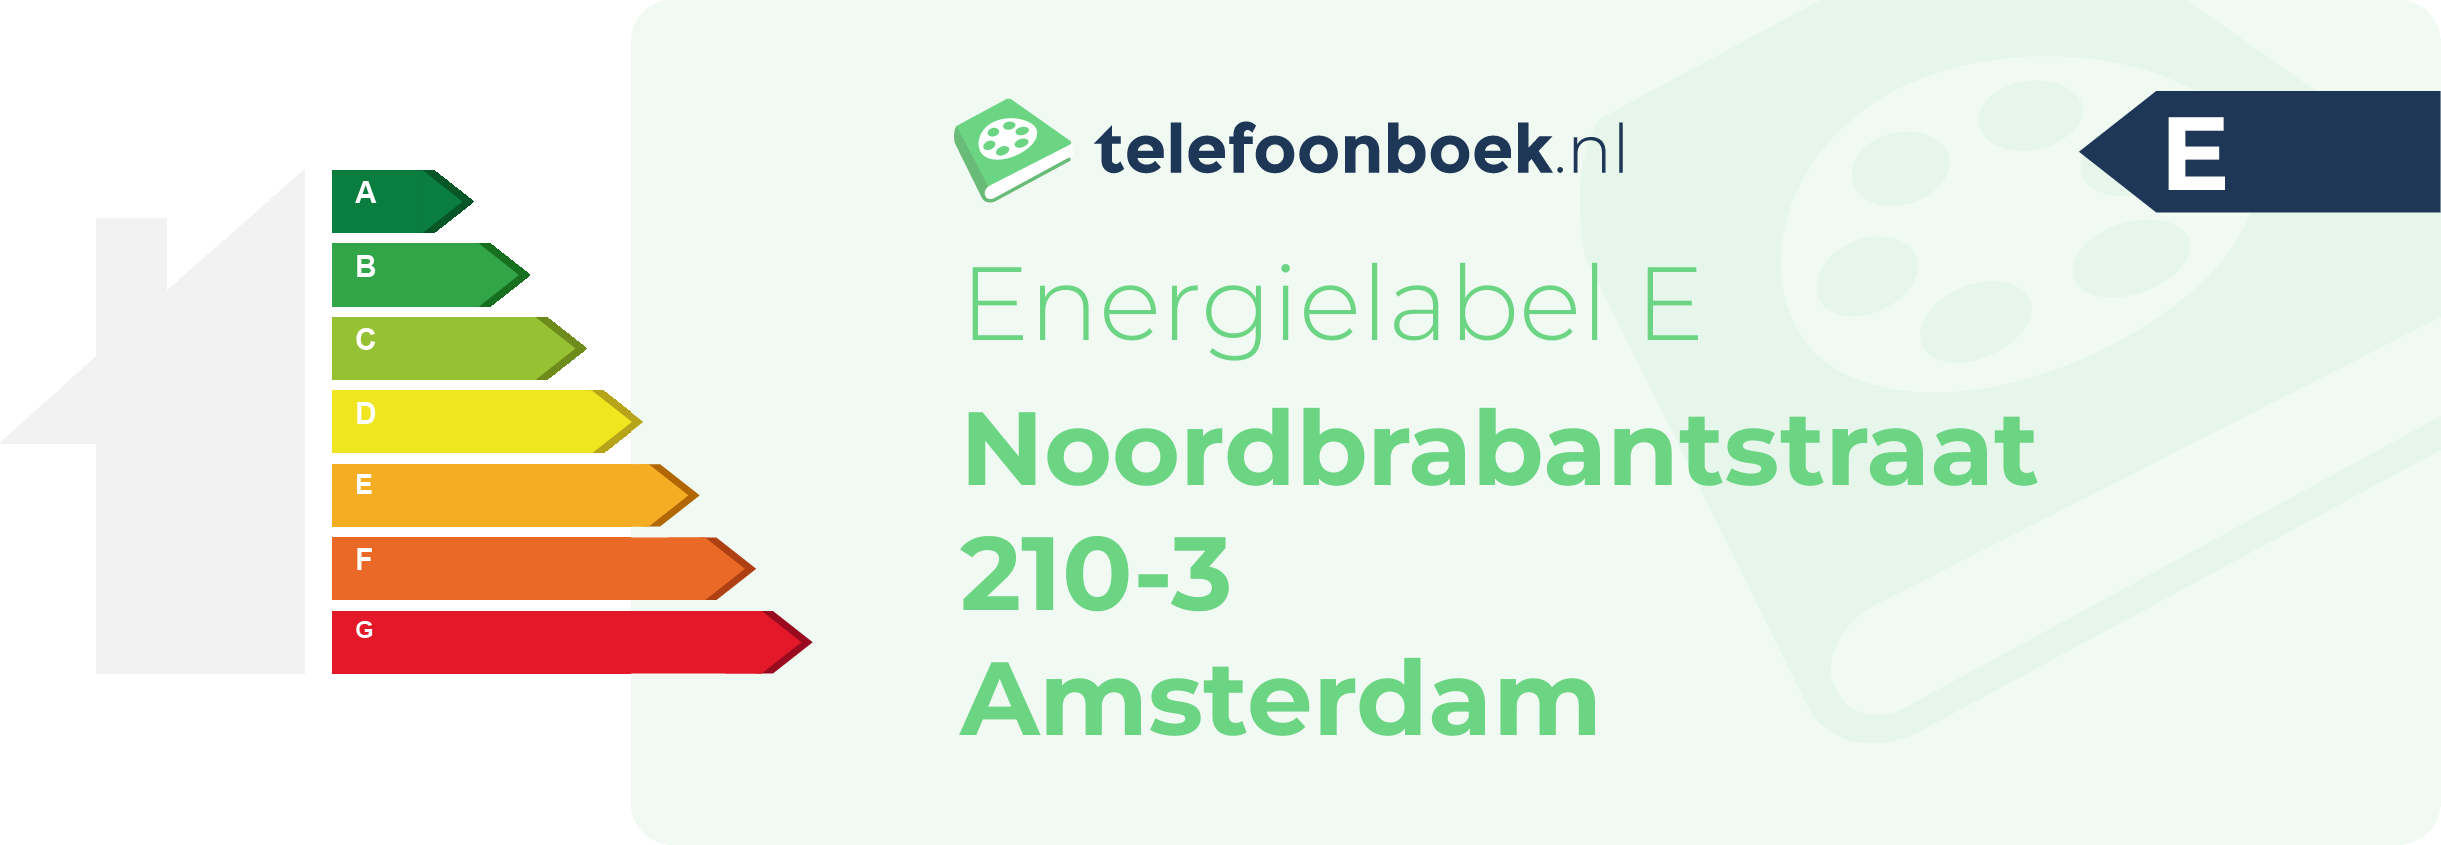 Energielabel Noordbrabantstraat 210-3 Amsterdam